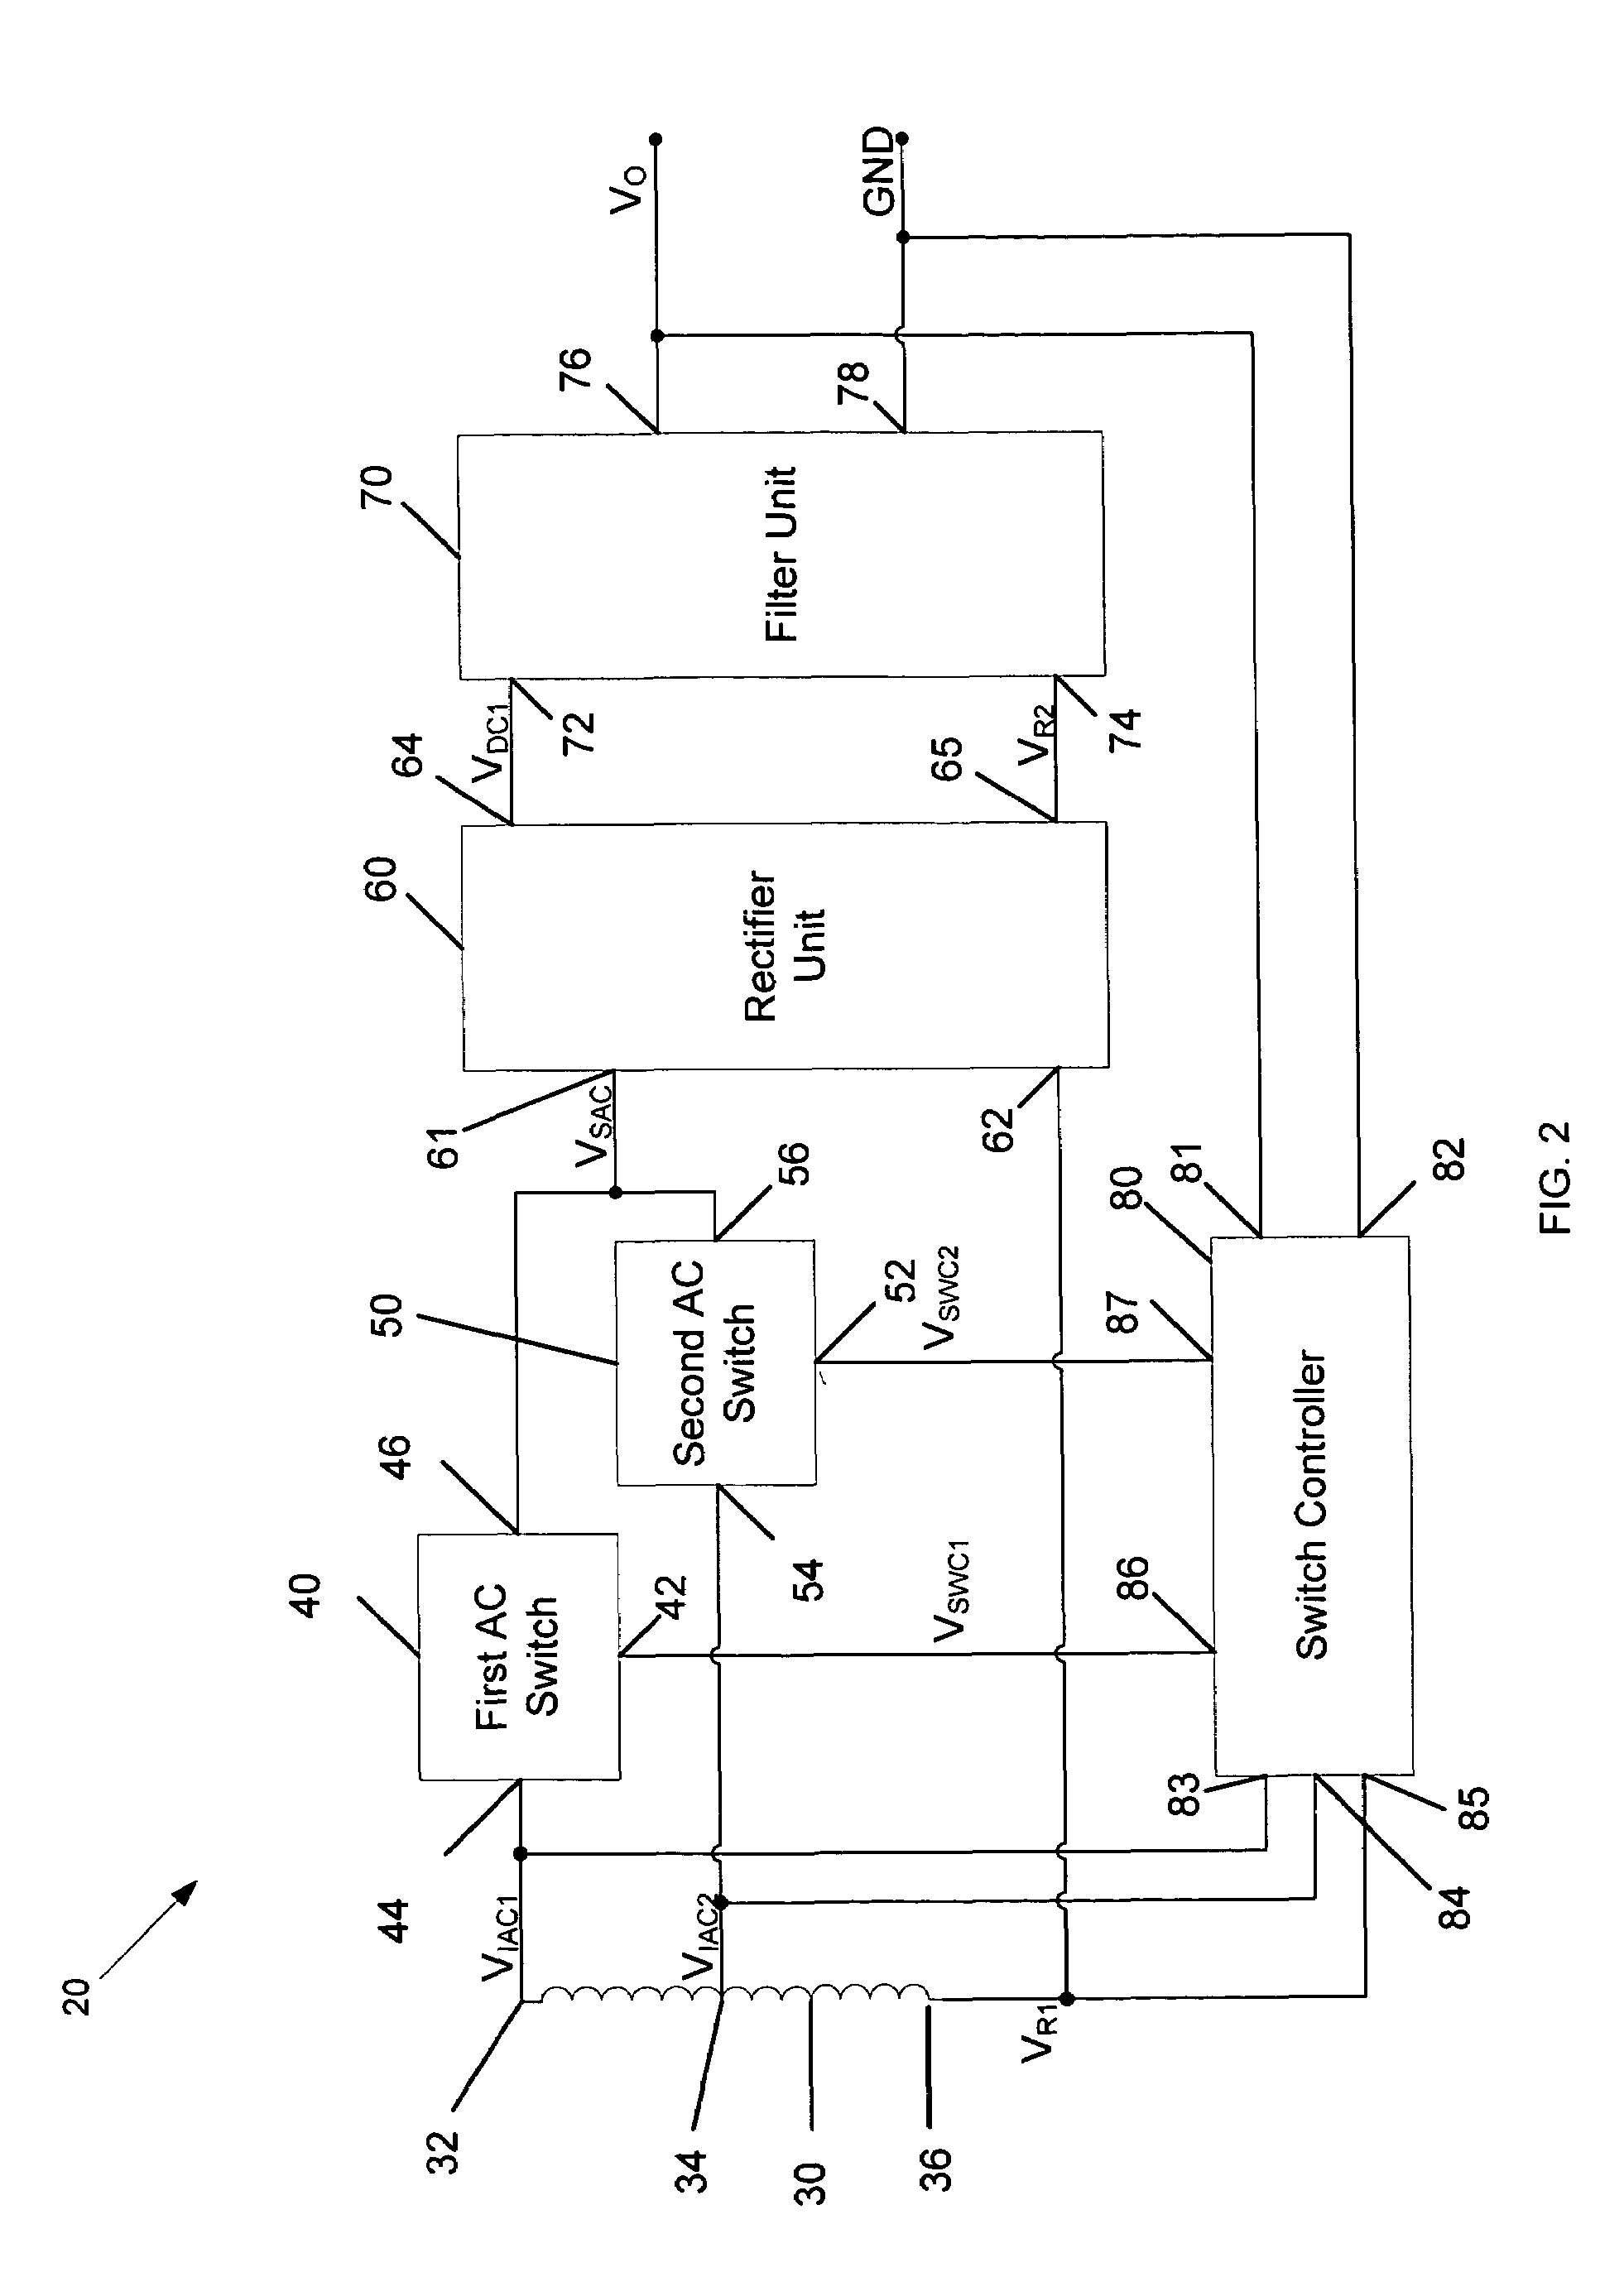 Generator transient regulator